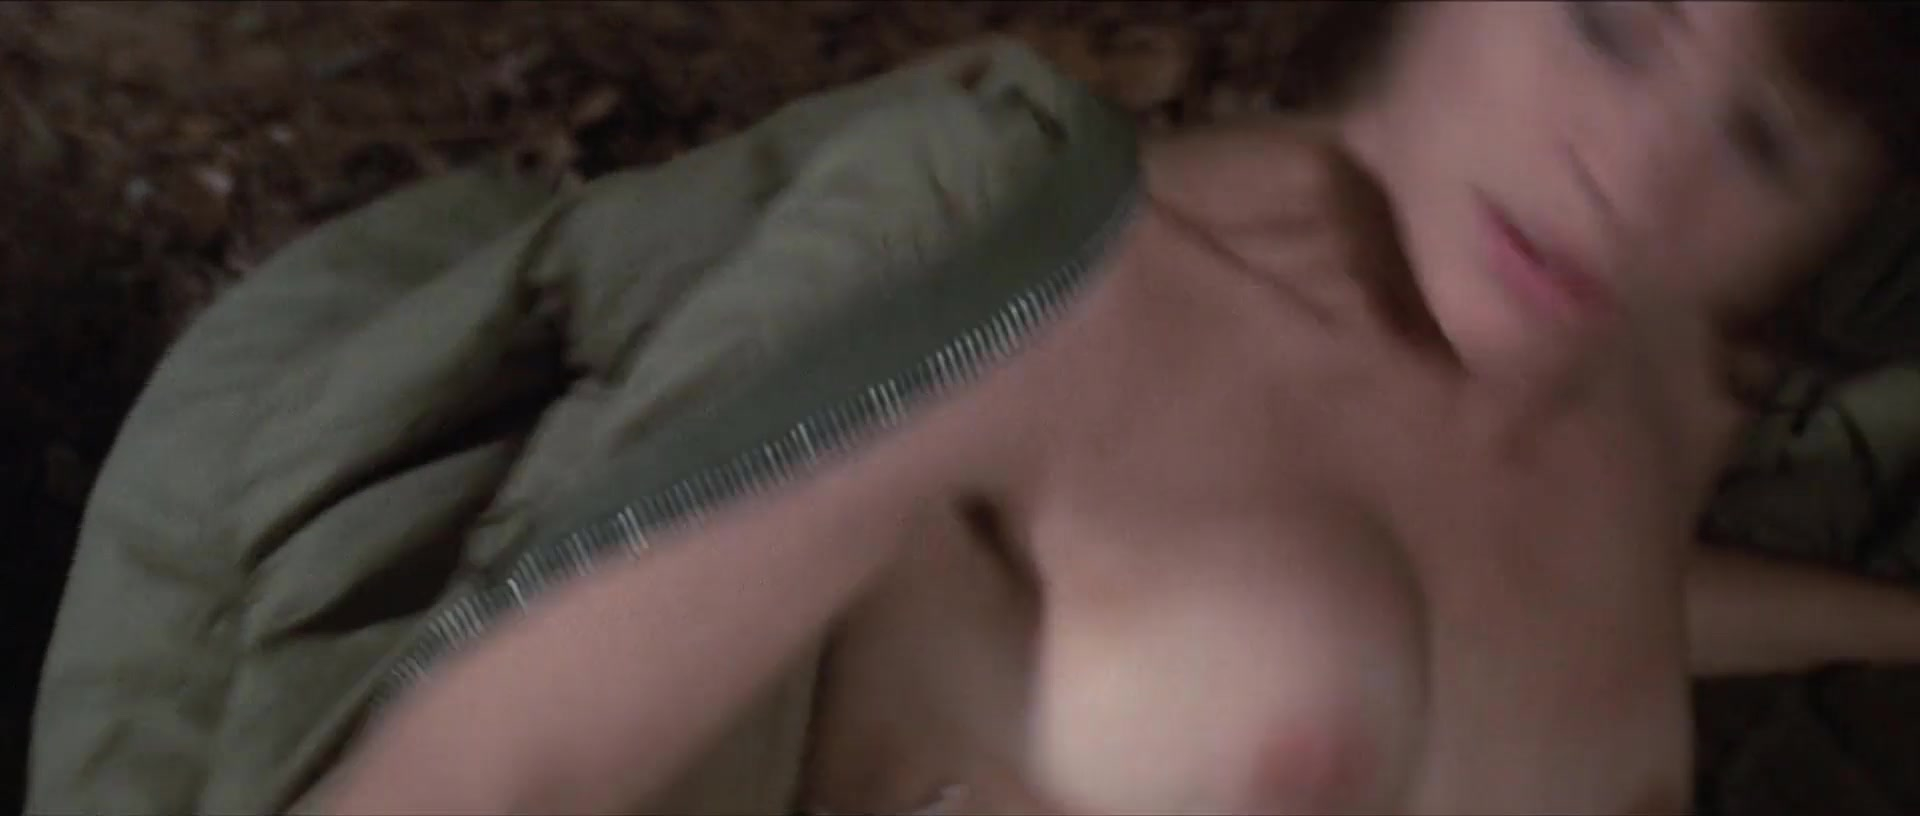 Nude video celebs Â» Linda Hamilton nude - King Kong Lives (1986)